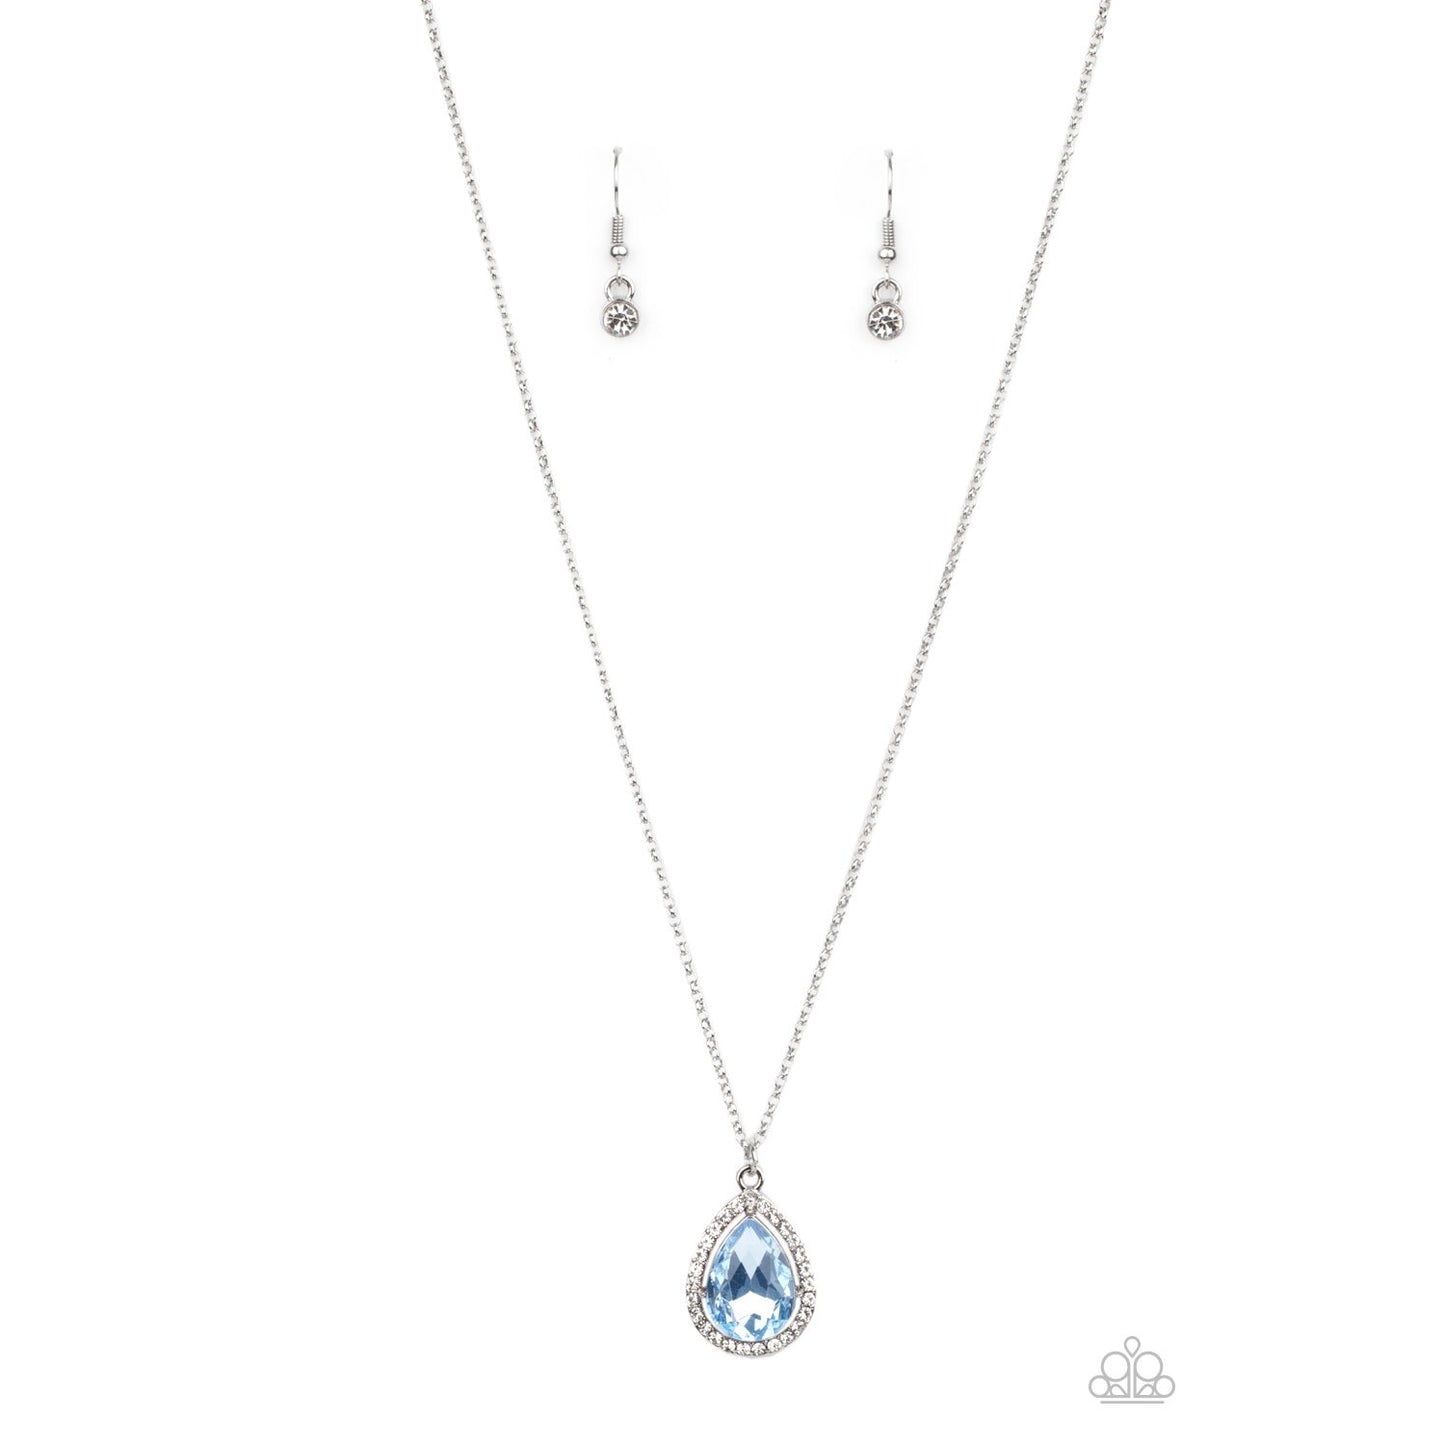 Duchess Decorum - Blue Rhinestone Teardrop Necklace - Paparazzi Accessories - GlaMarous Titi Jewels